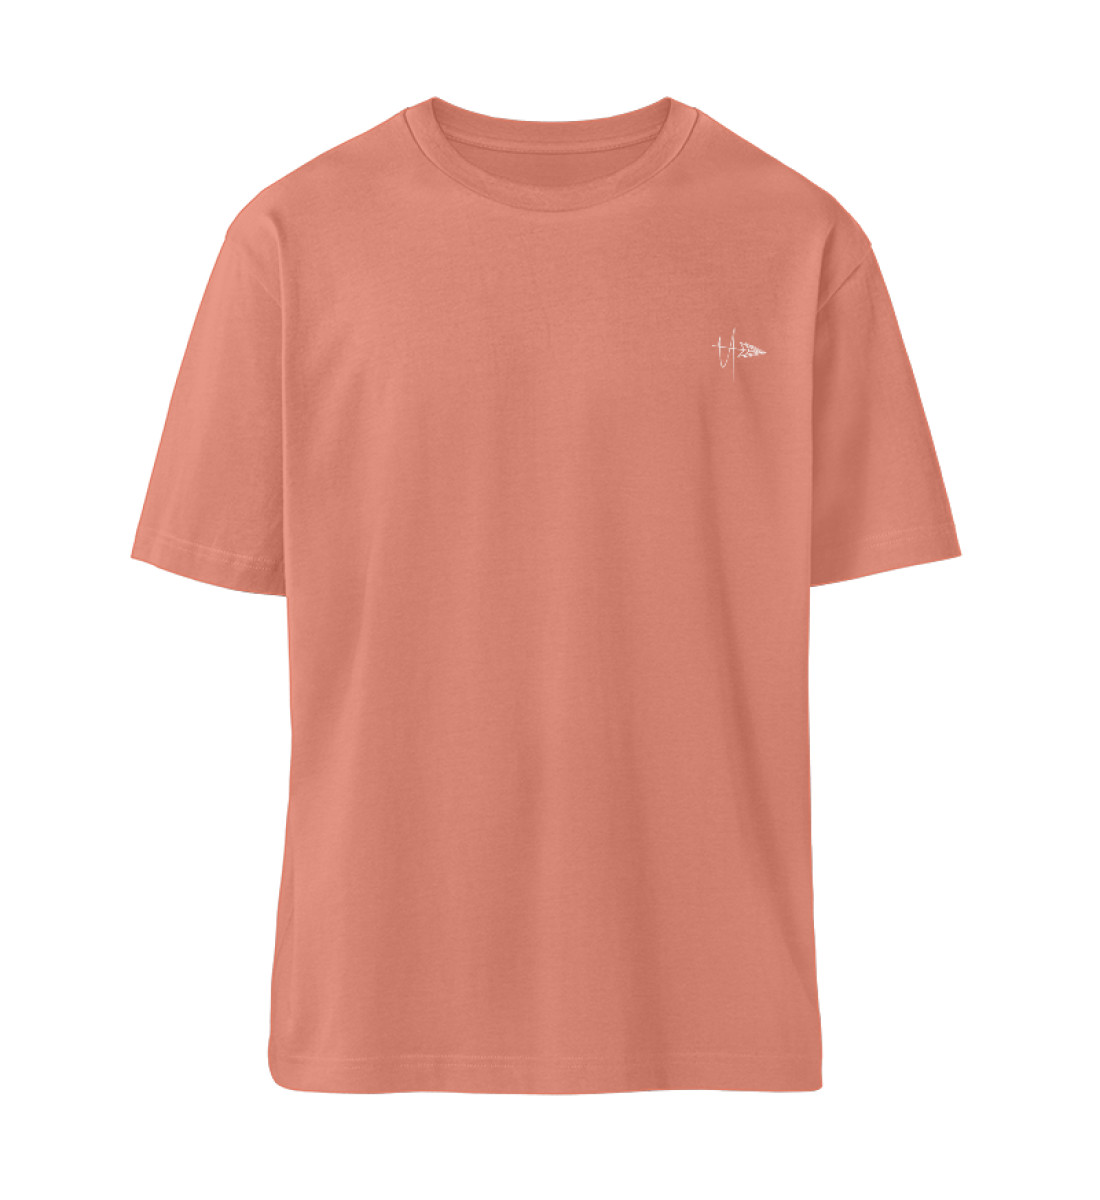 shirt // palm // white - Fuser Relaxed Shirt ST/ST-7019